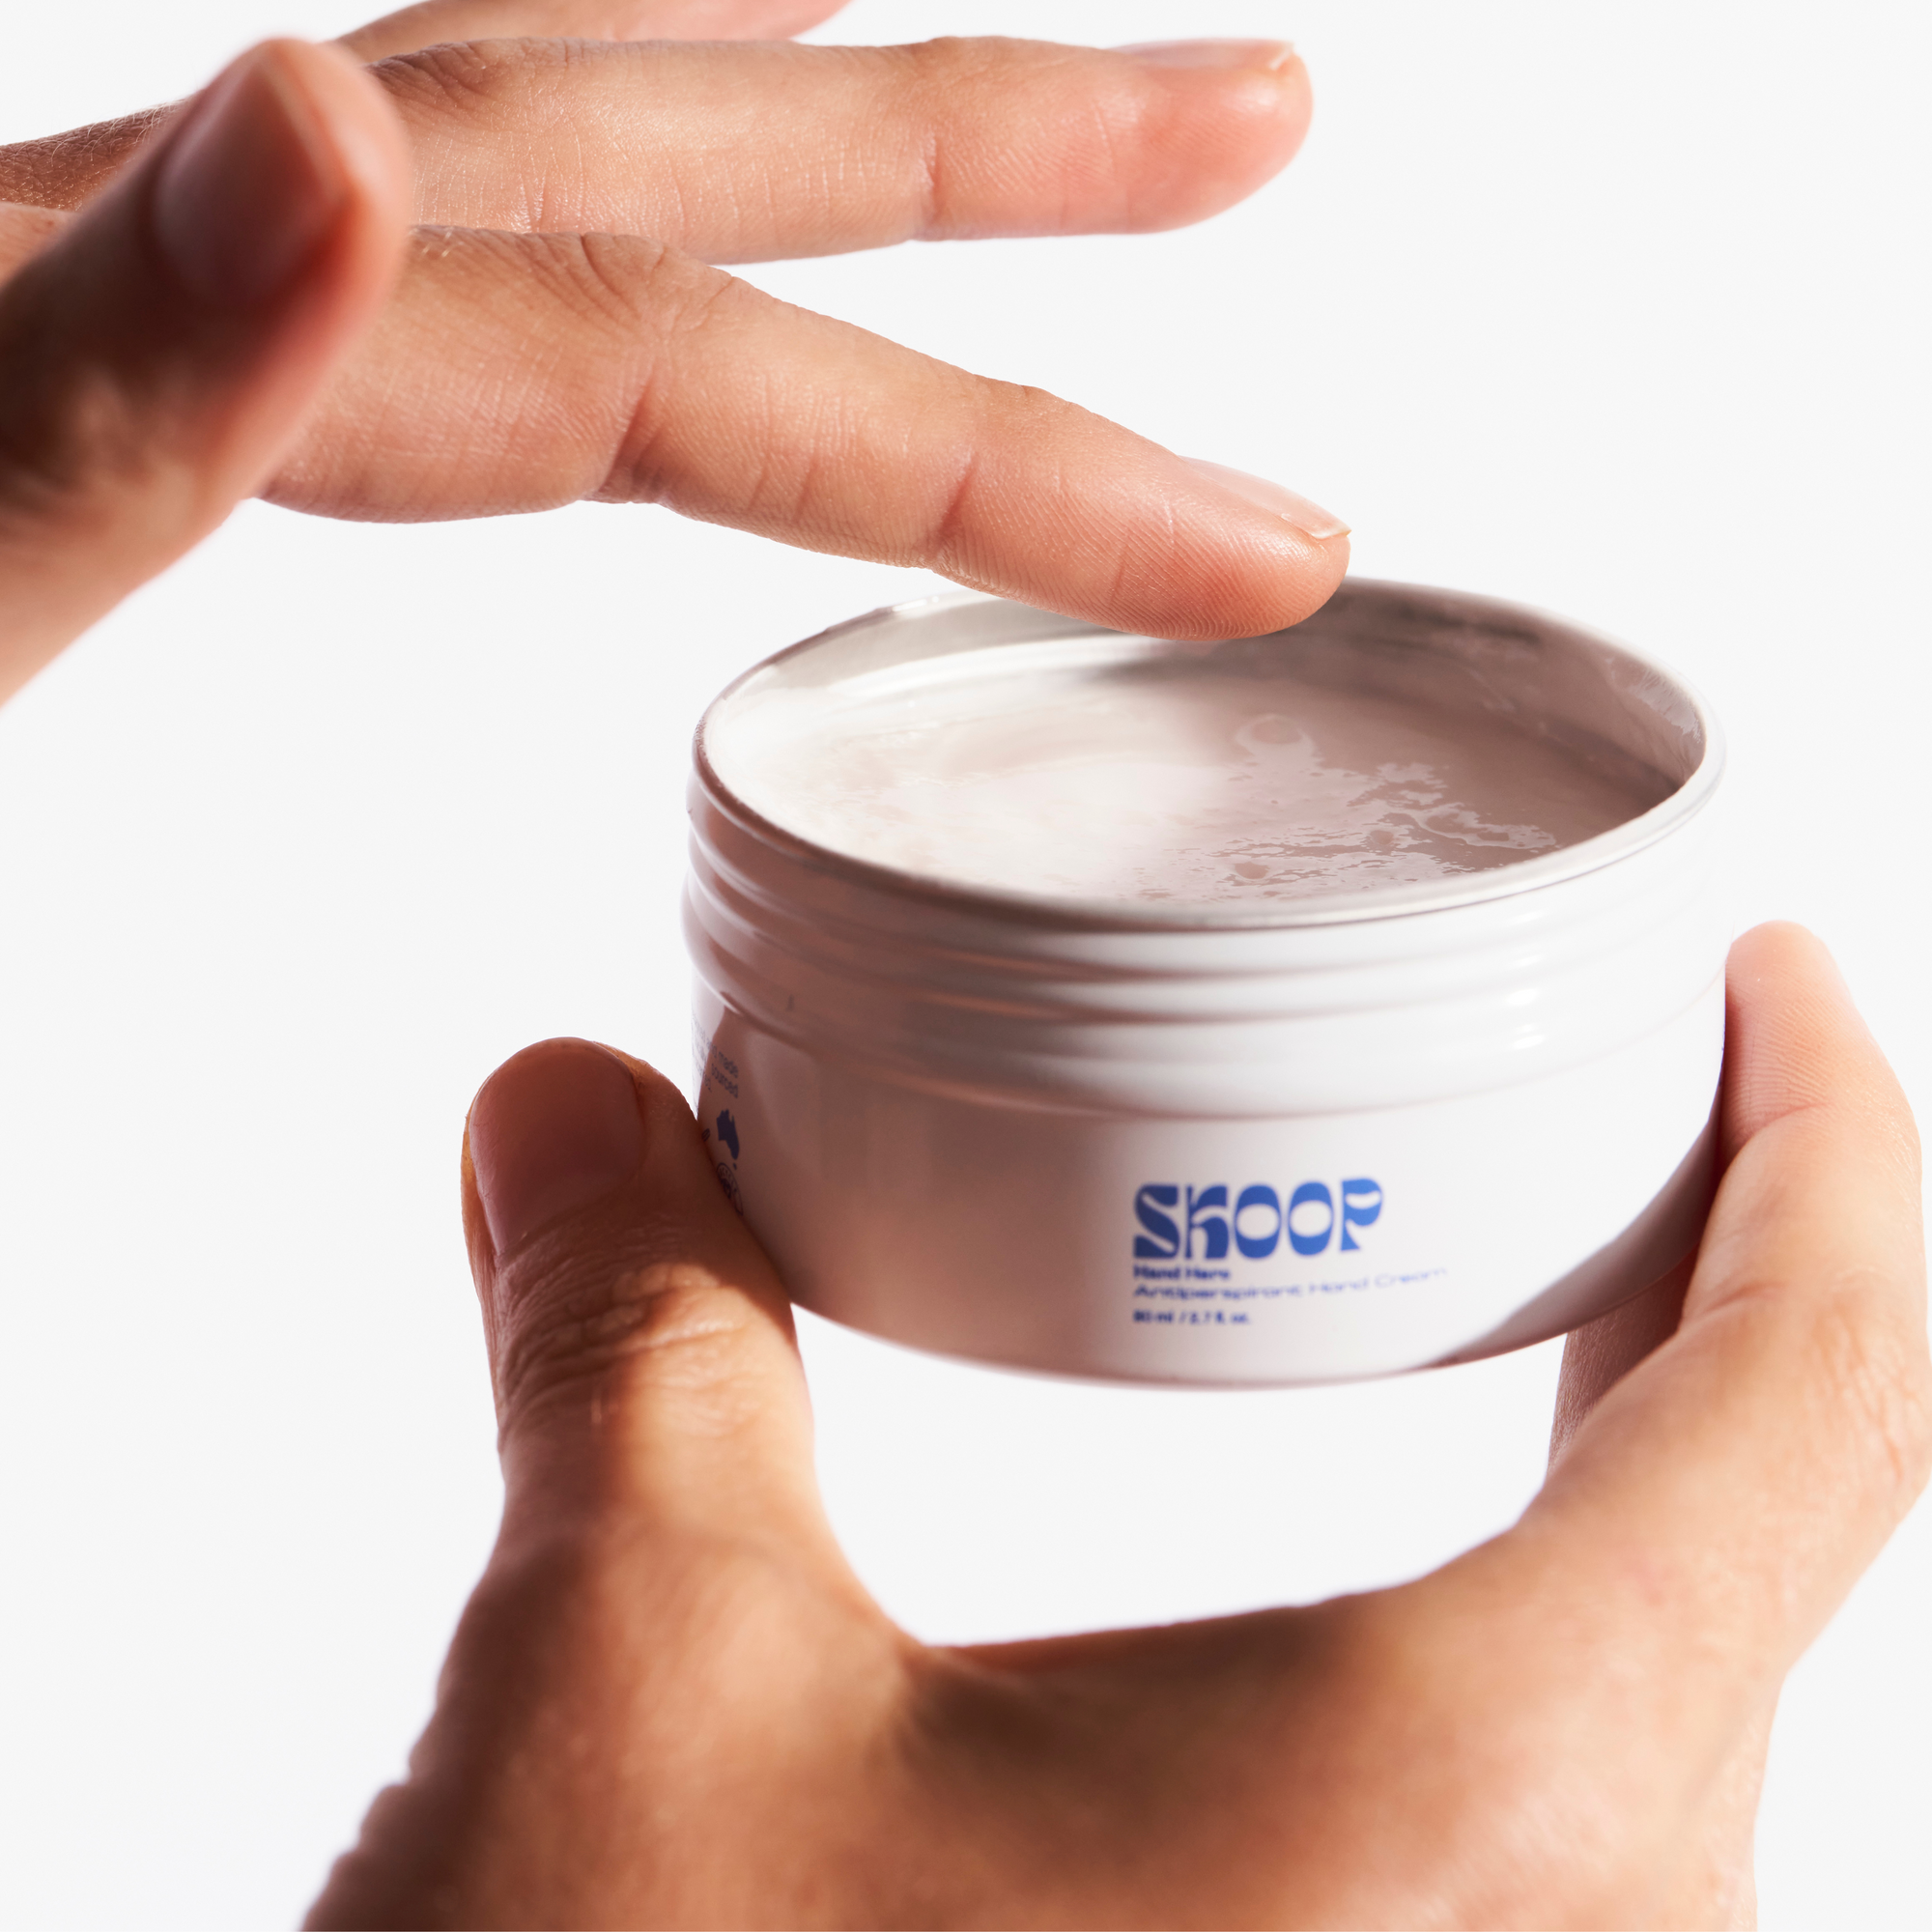 Skoop Skincare, Hand Hero Antiperspirant Hand Cream. Hand Hero application. Skoop Skincare Tin with Skoop logo visible.